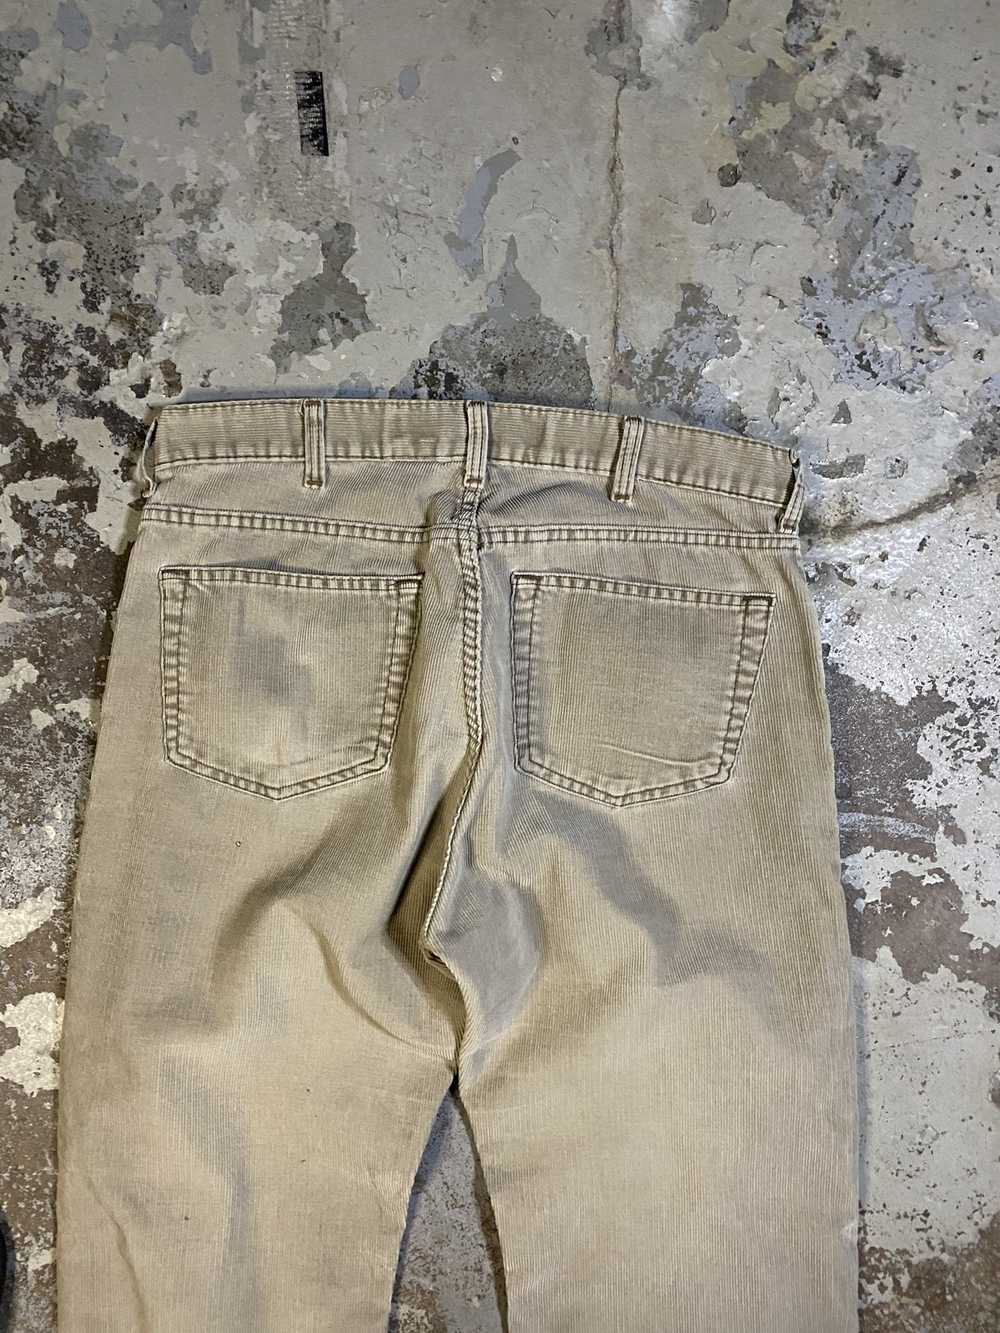 Gap Vintage GAP Corduroy Pants - image 8